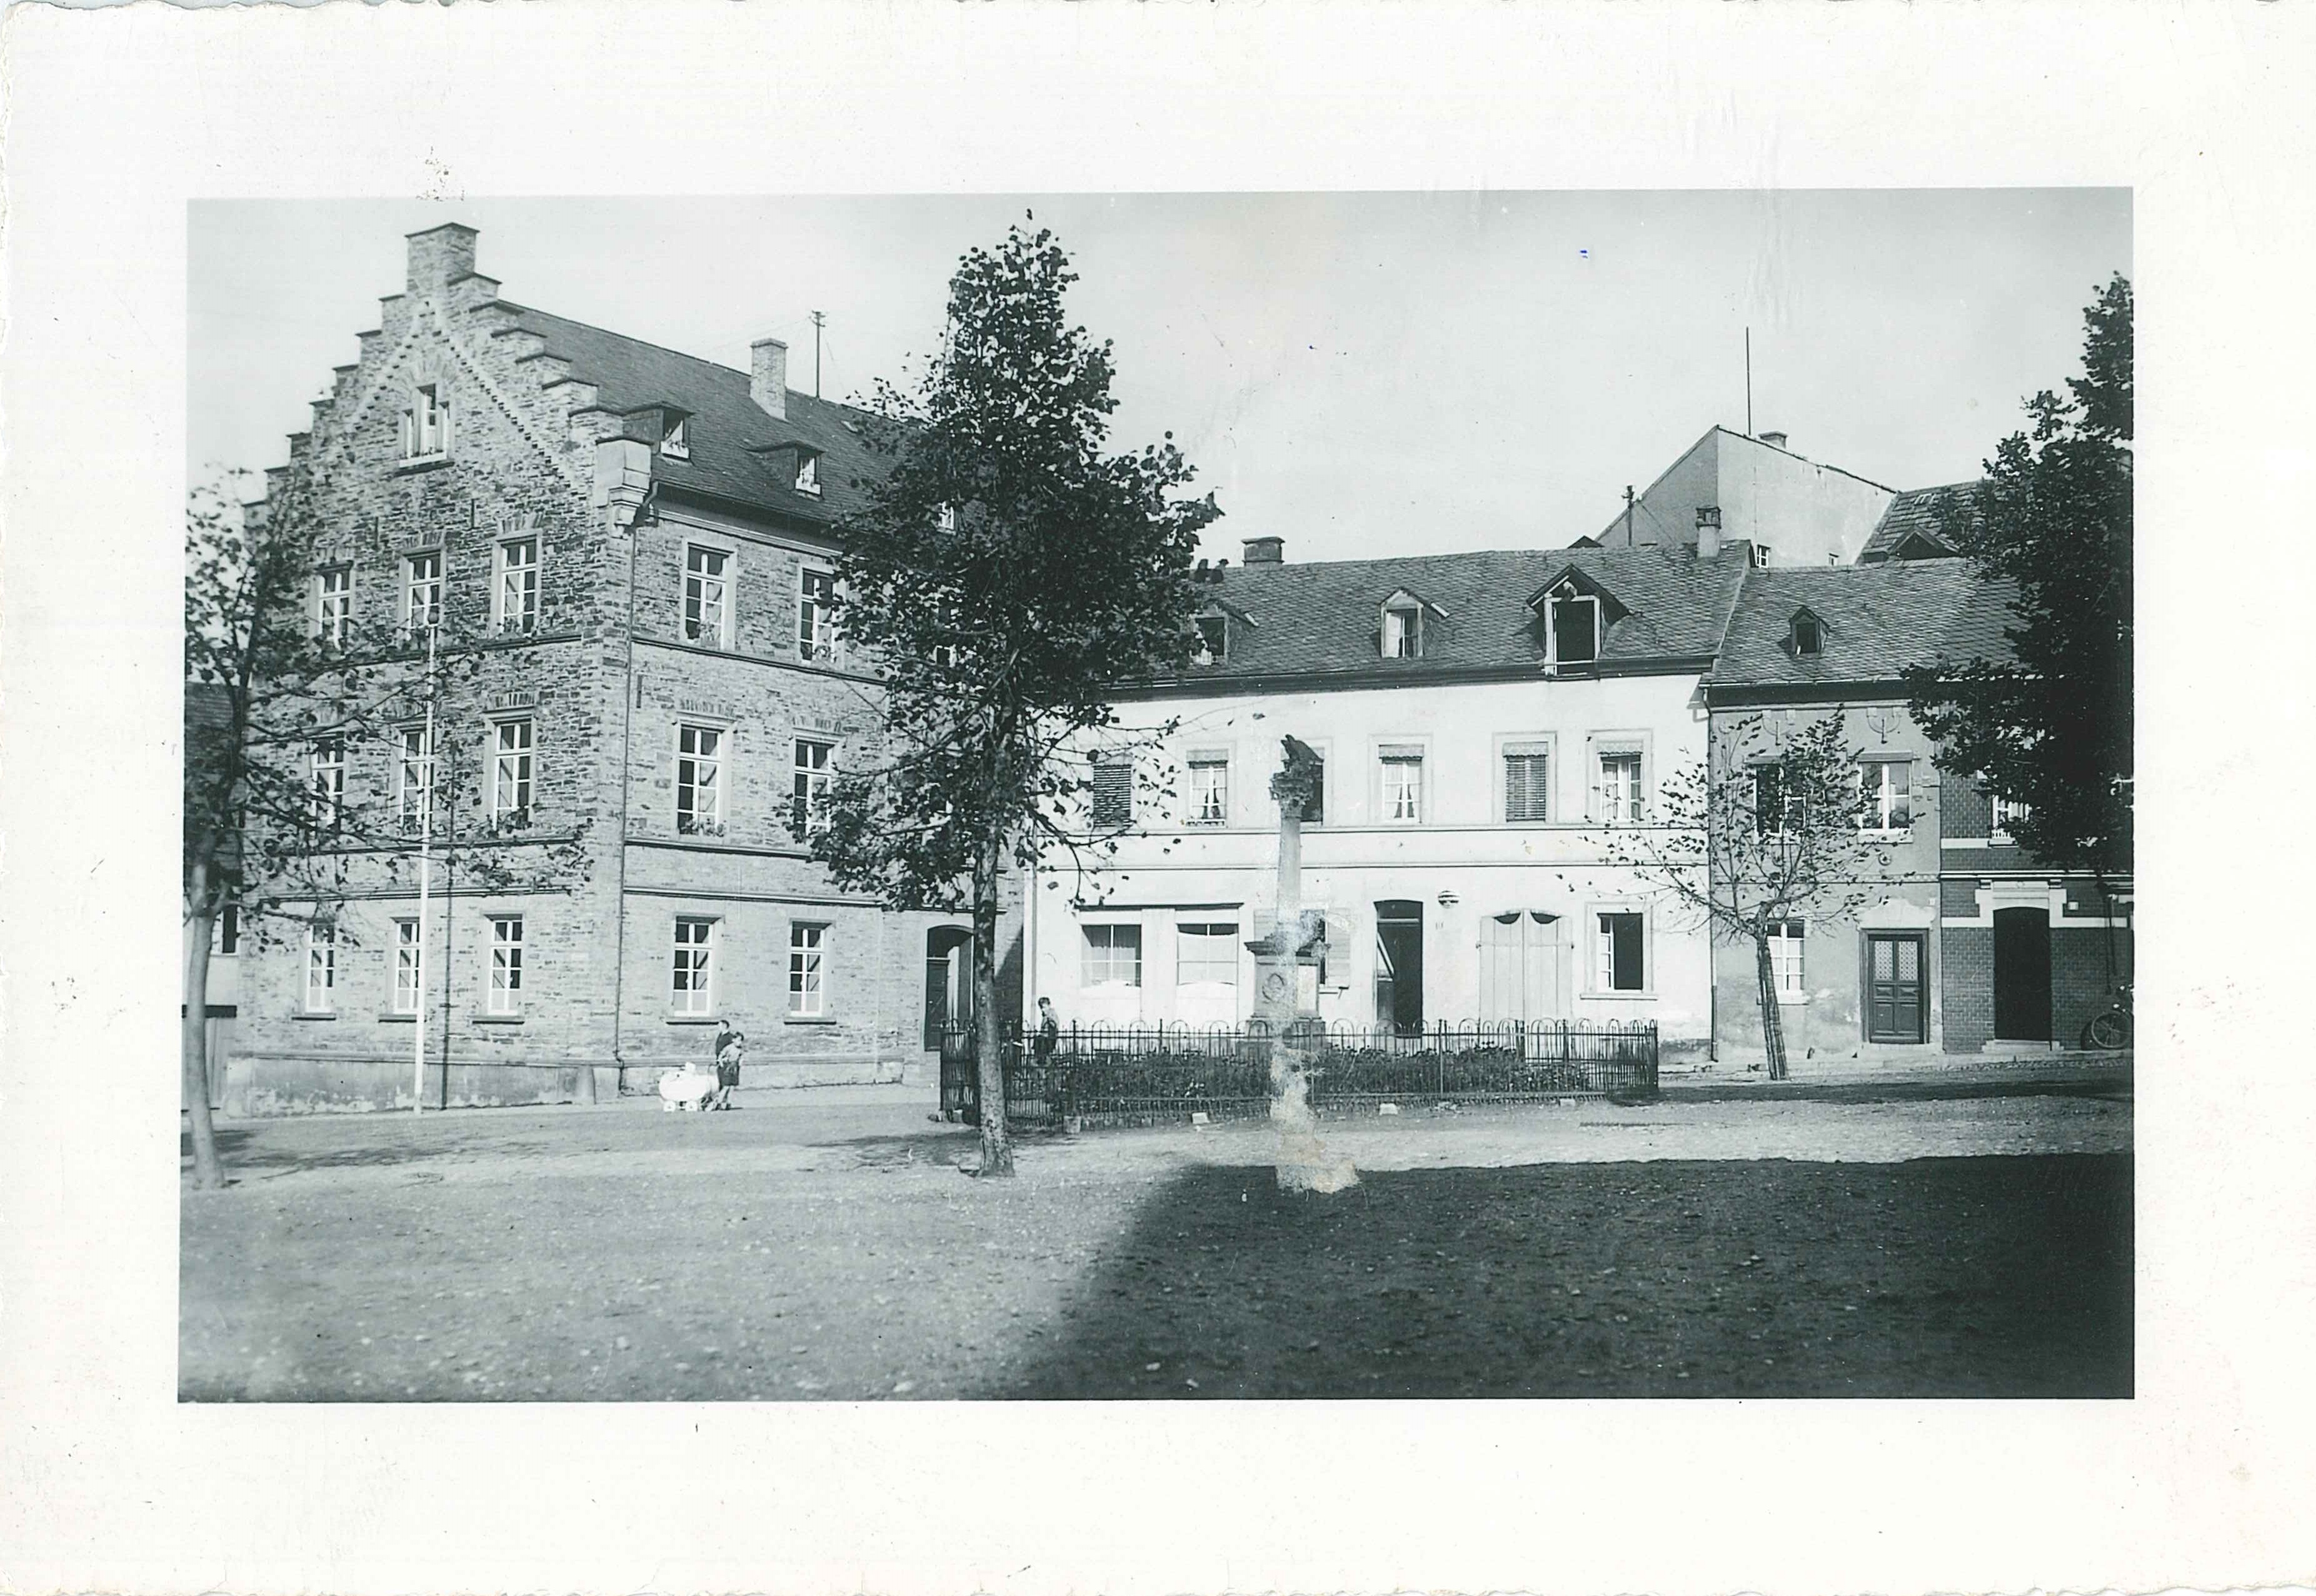 Ehemalige katholische Knabenschule am Kirchplatz in Bendorf, 1937/38 (REM CC BY-NC-SA)